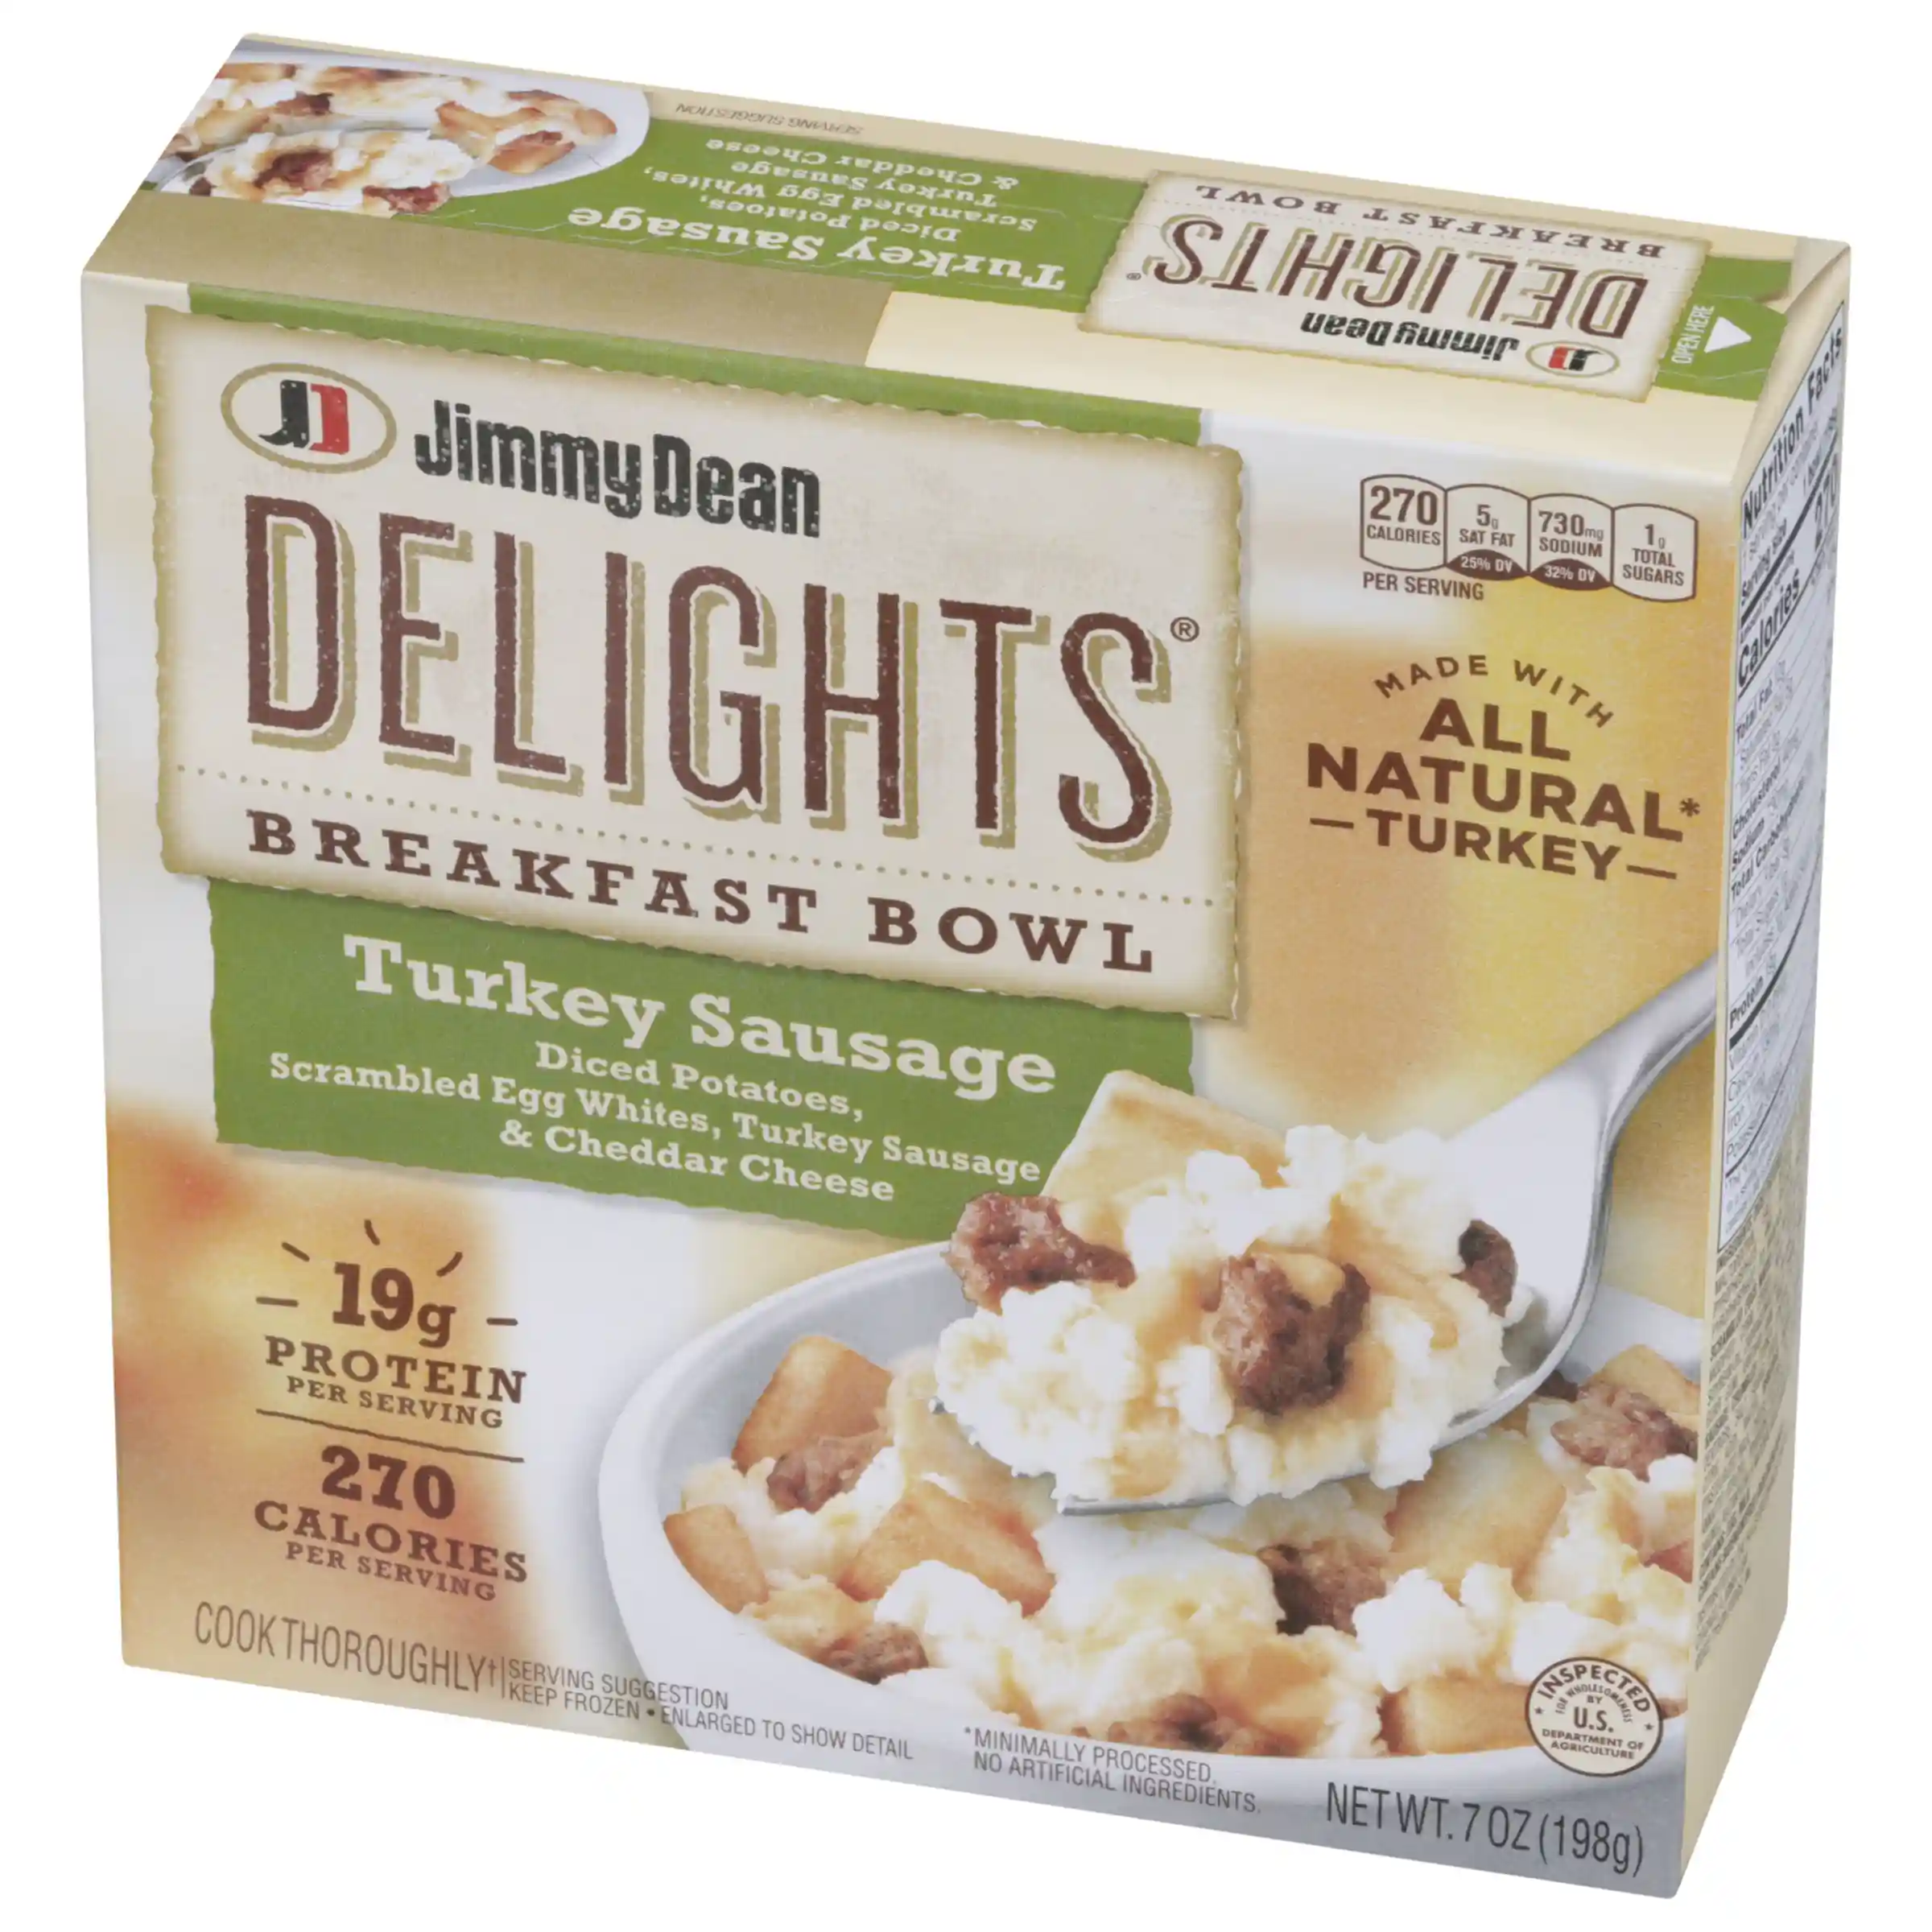  Jimmy Dean Delights Breakfast Bowl, Turkey Sausage_image_11